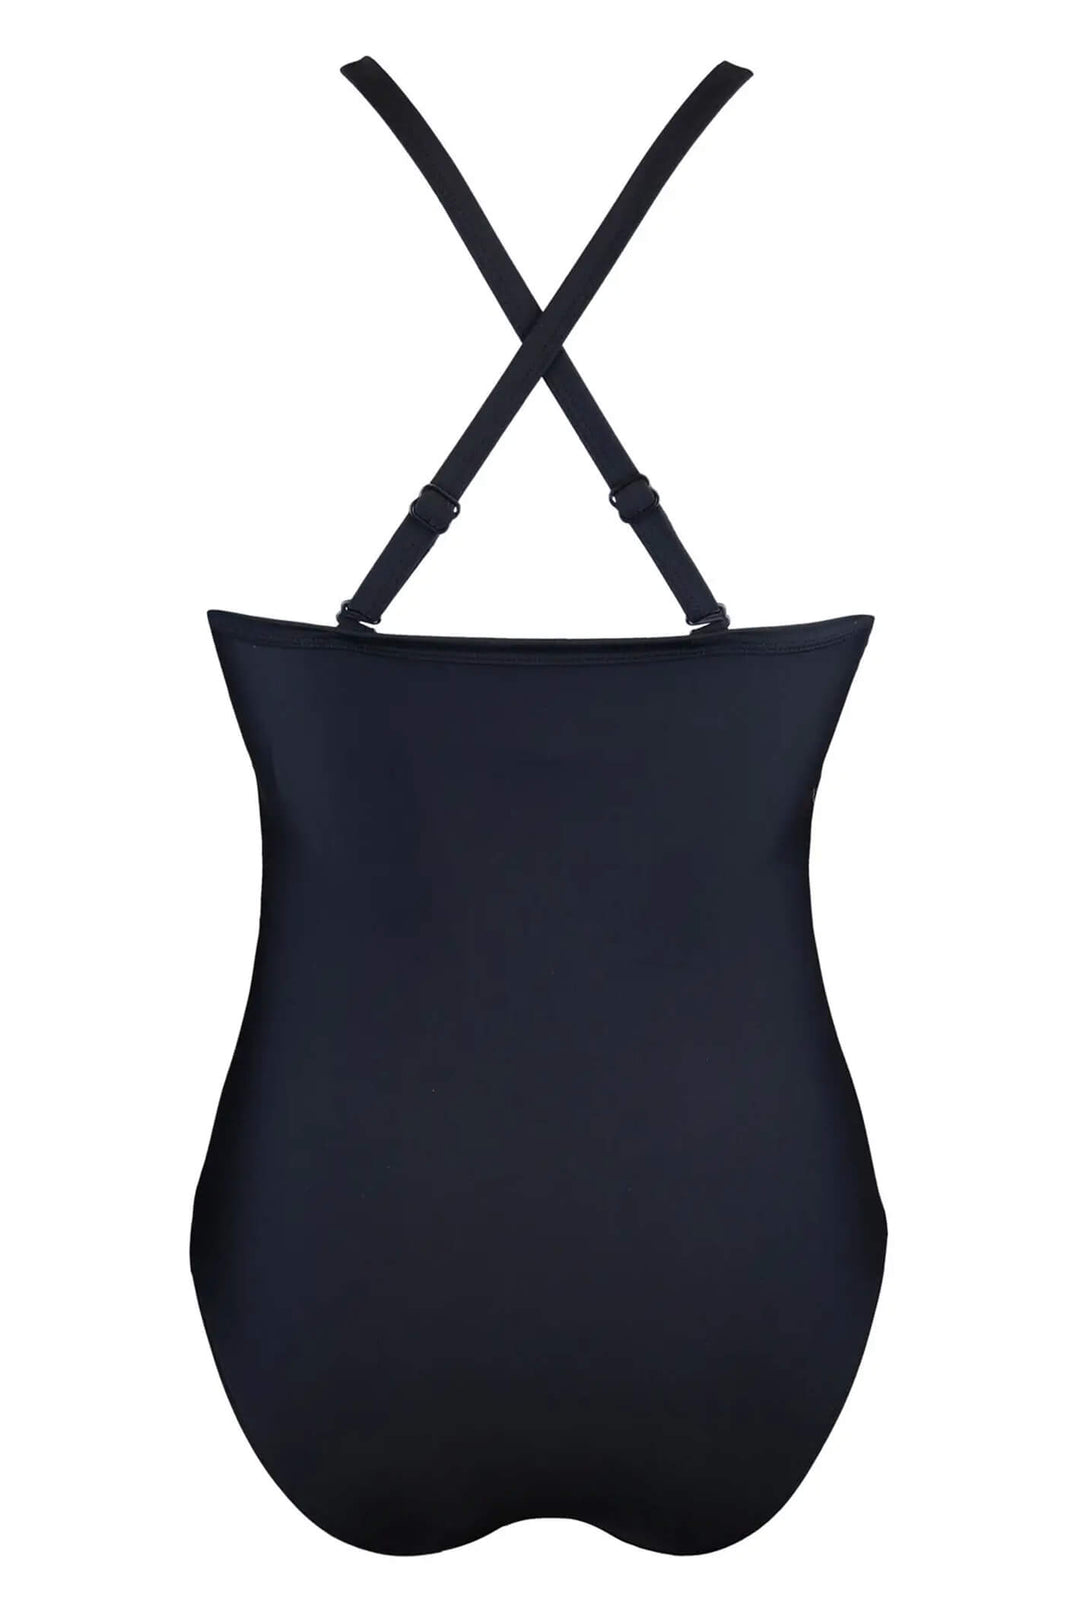 Pour Moi PM 1493 Stripe Control Black & White Swimsuit - Shirley Allum Boutique